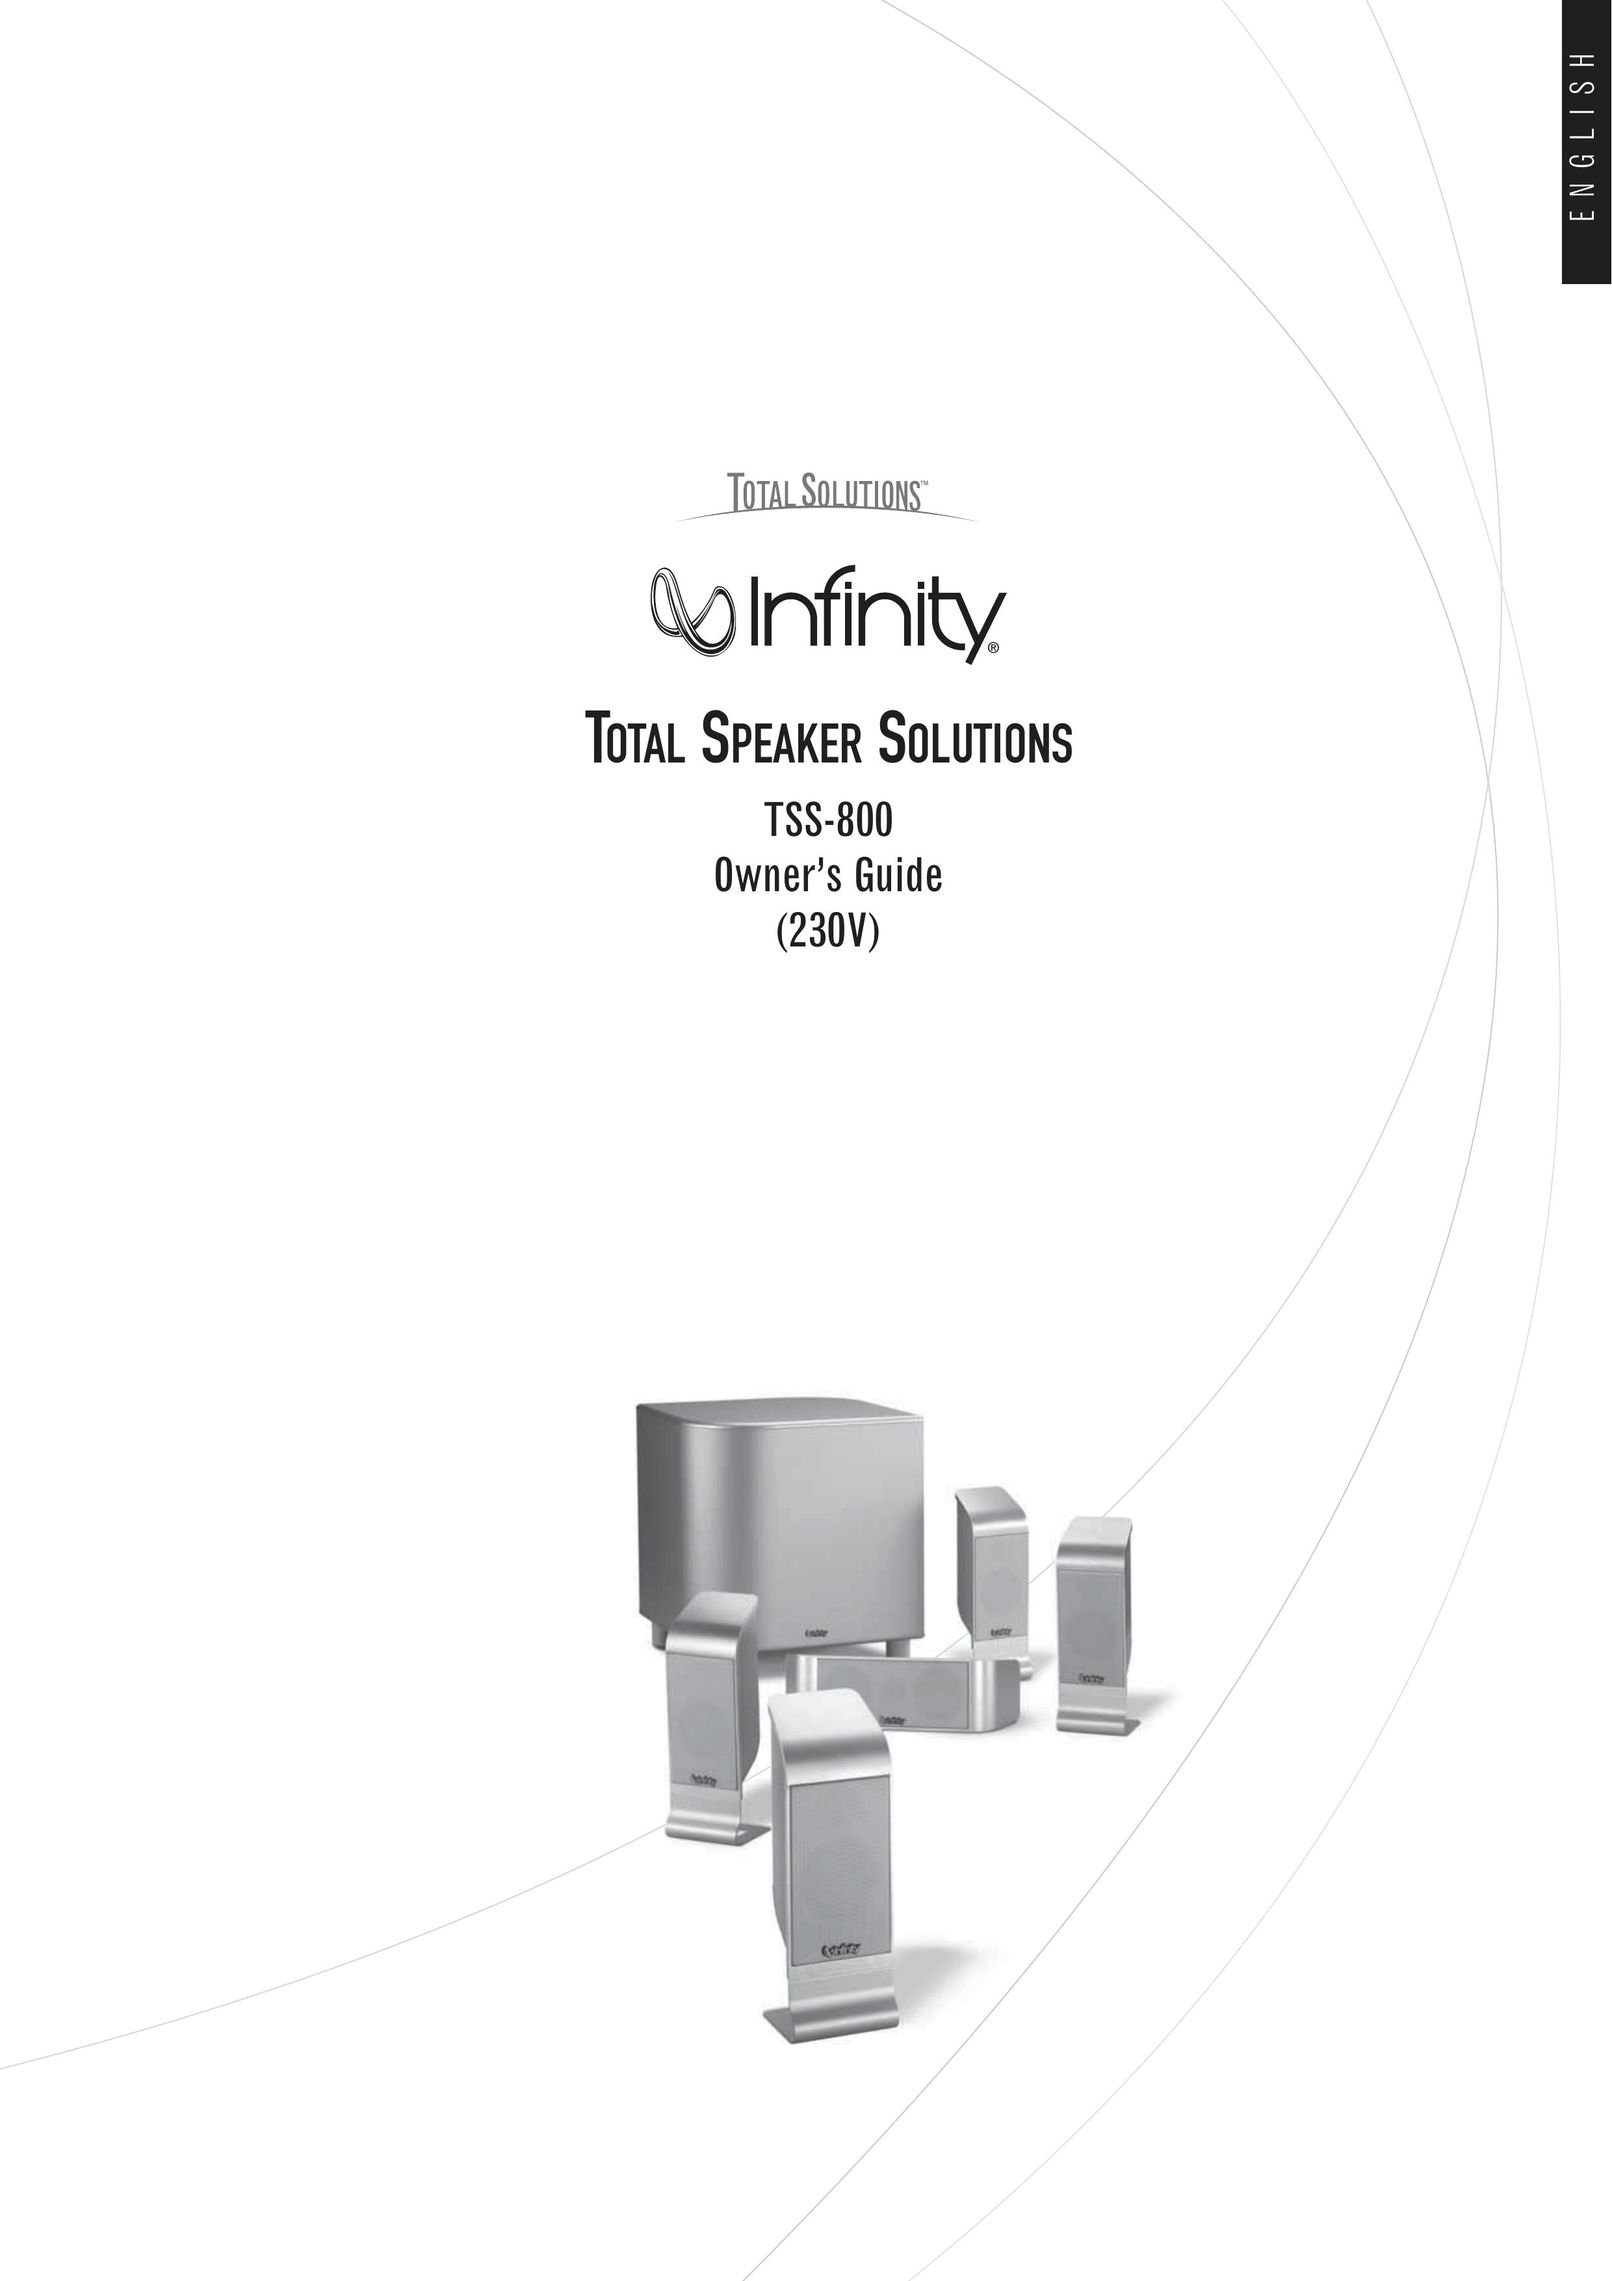 Infiniti Infinity Total Speaker Solutions Speaker System User Manual